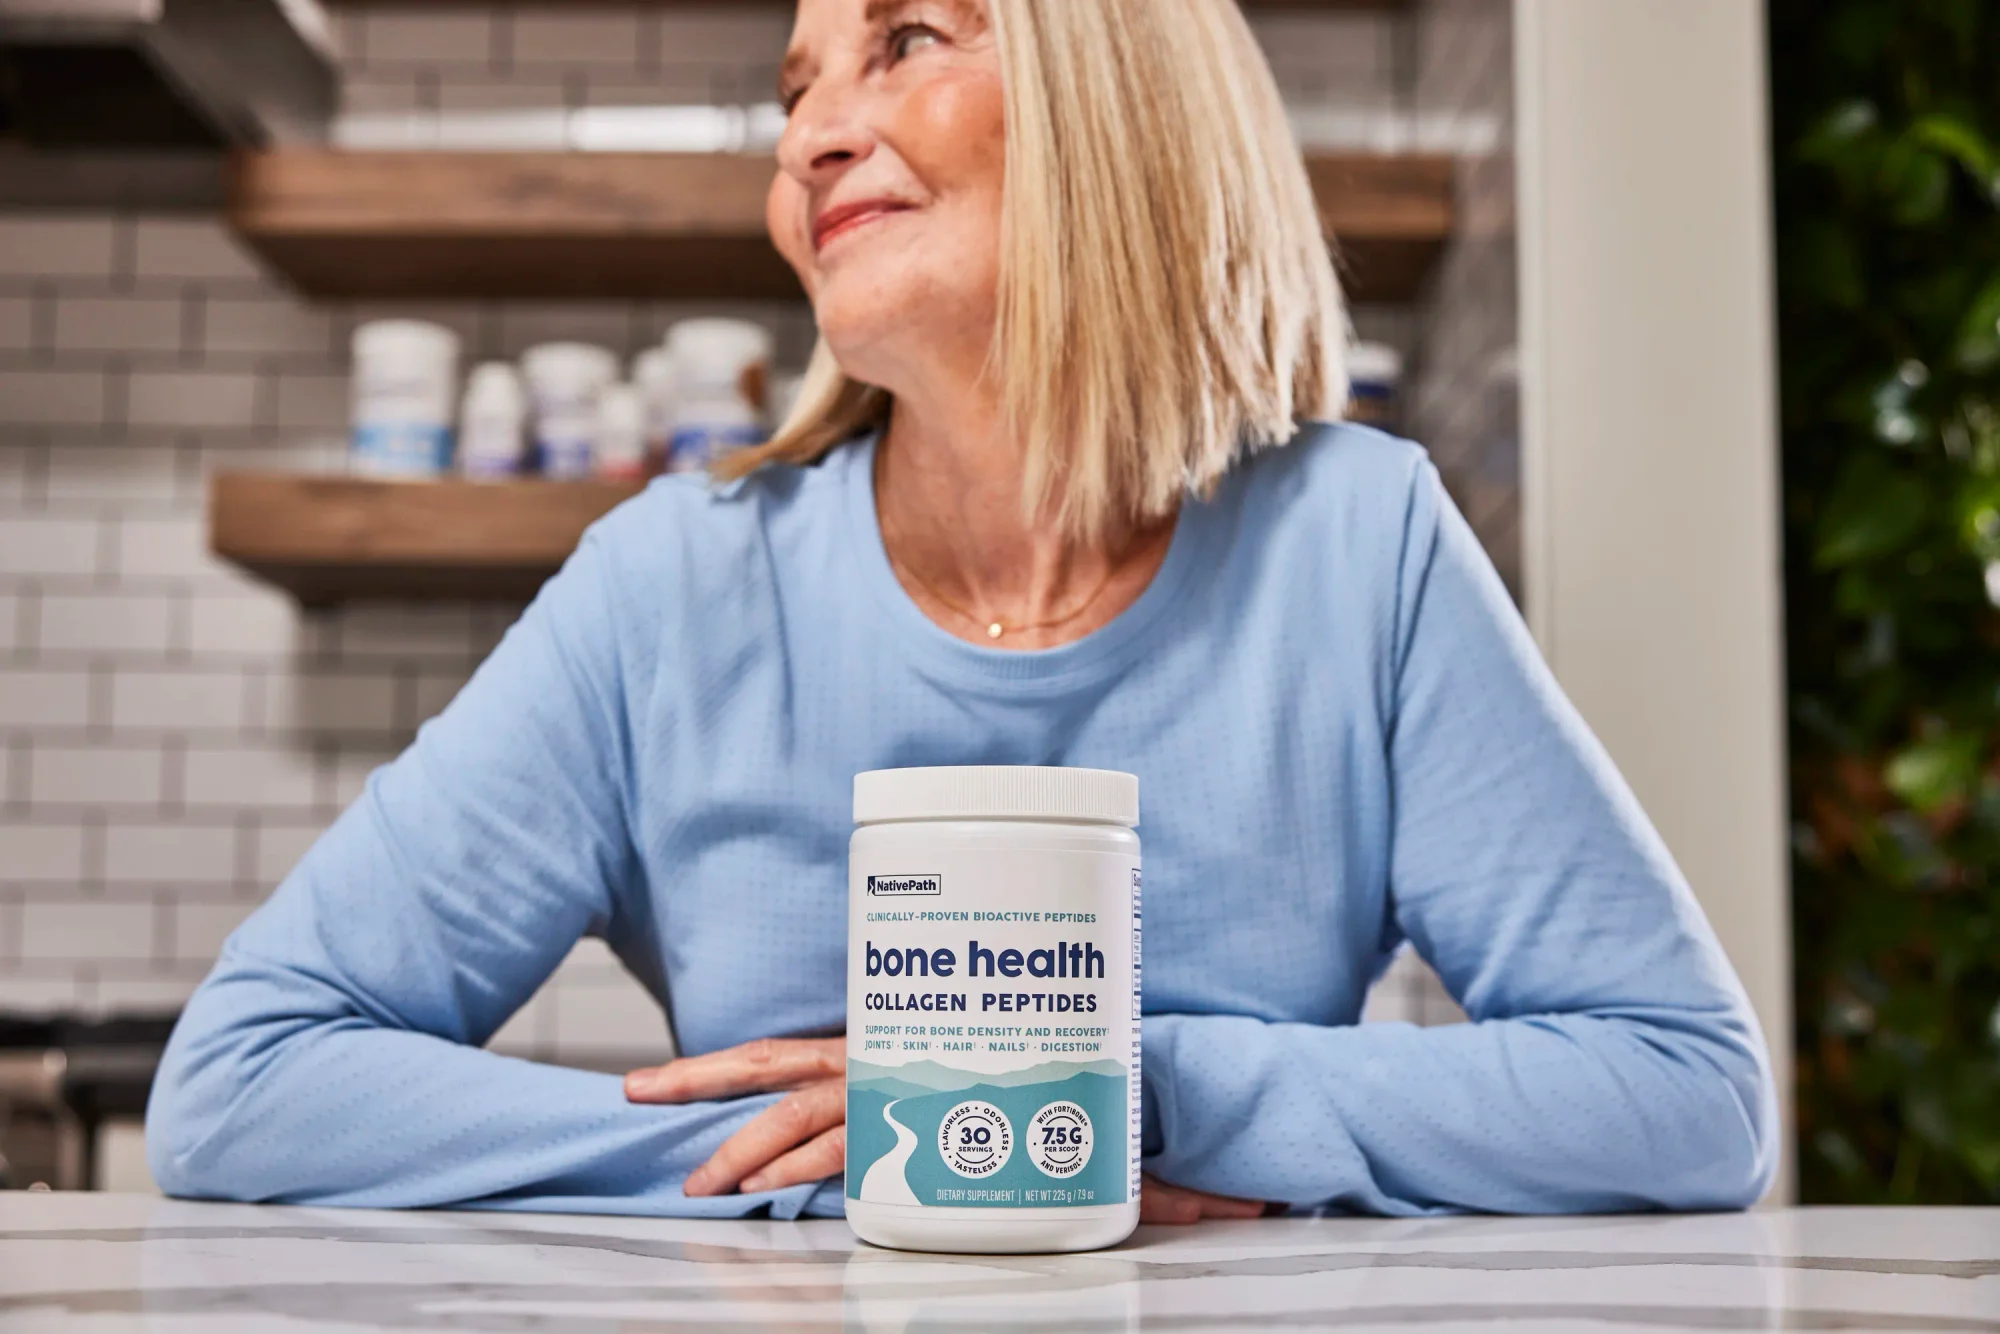 Older blonde woman in blue shirt sitting at granite kitchen countertop with jar of NativePath Bone Health Collagen Peptides.